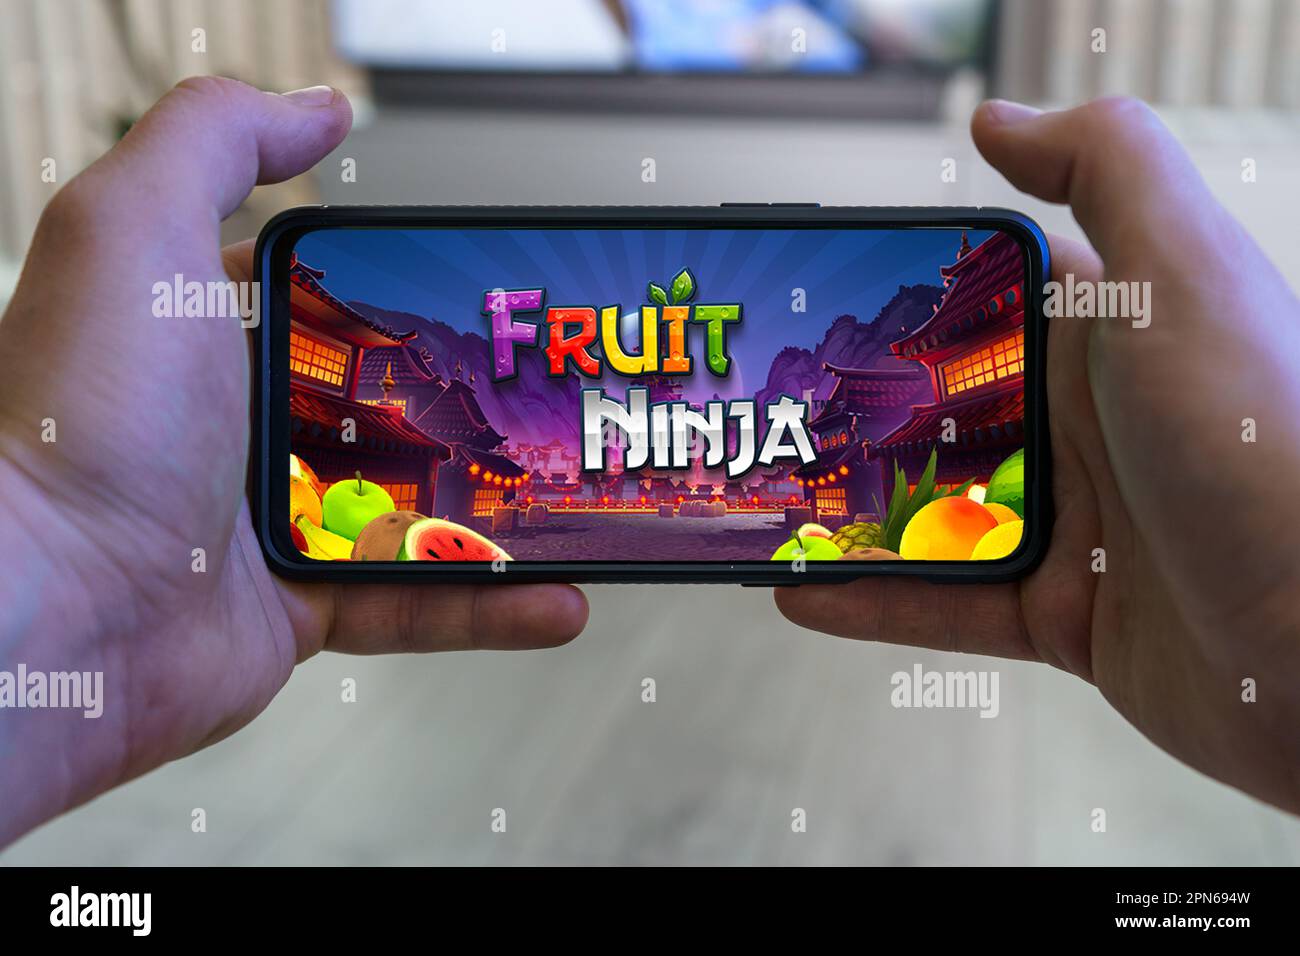 Nay's Game Reviews: Mobile Gaming Month: Fruit Ninja